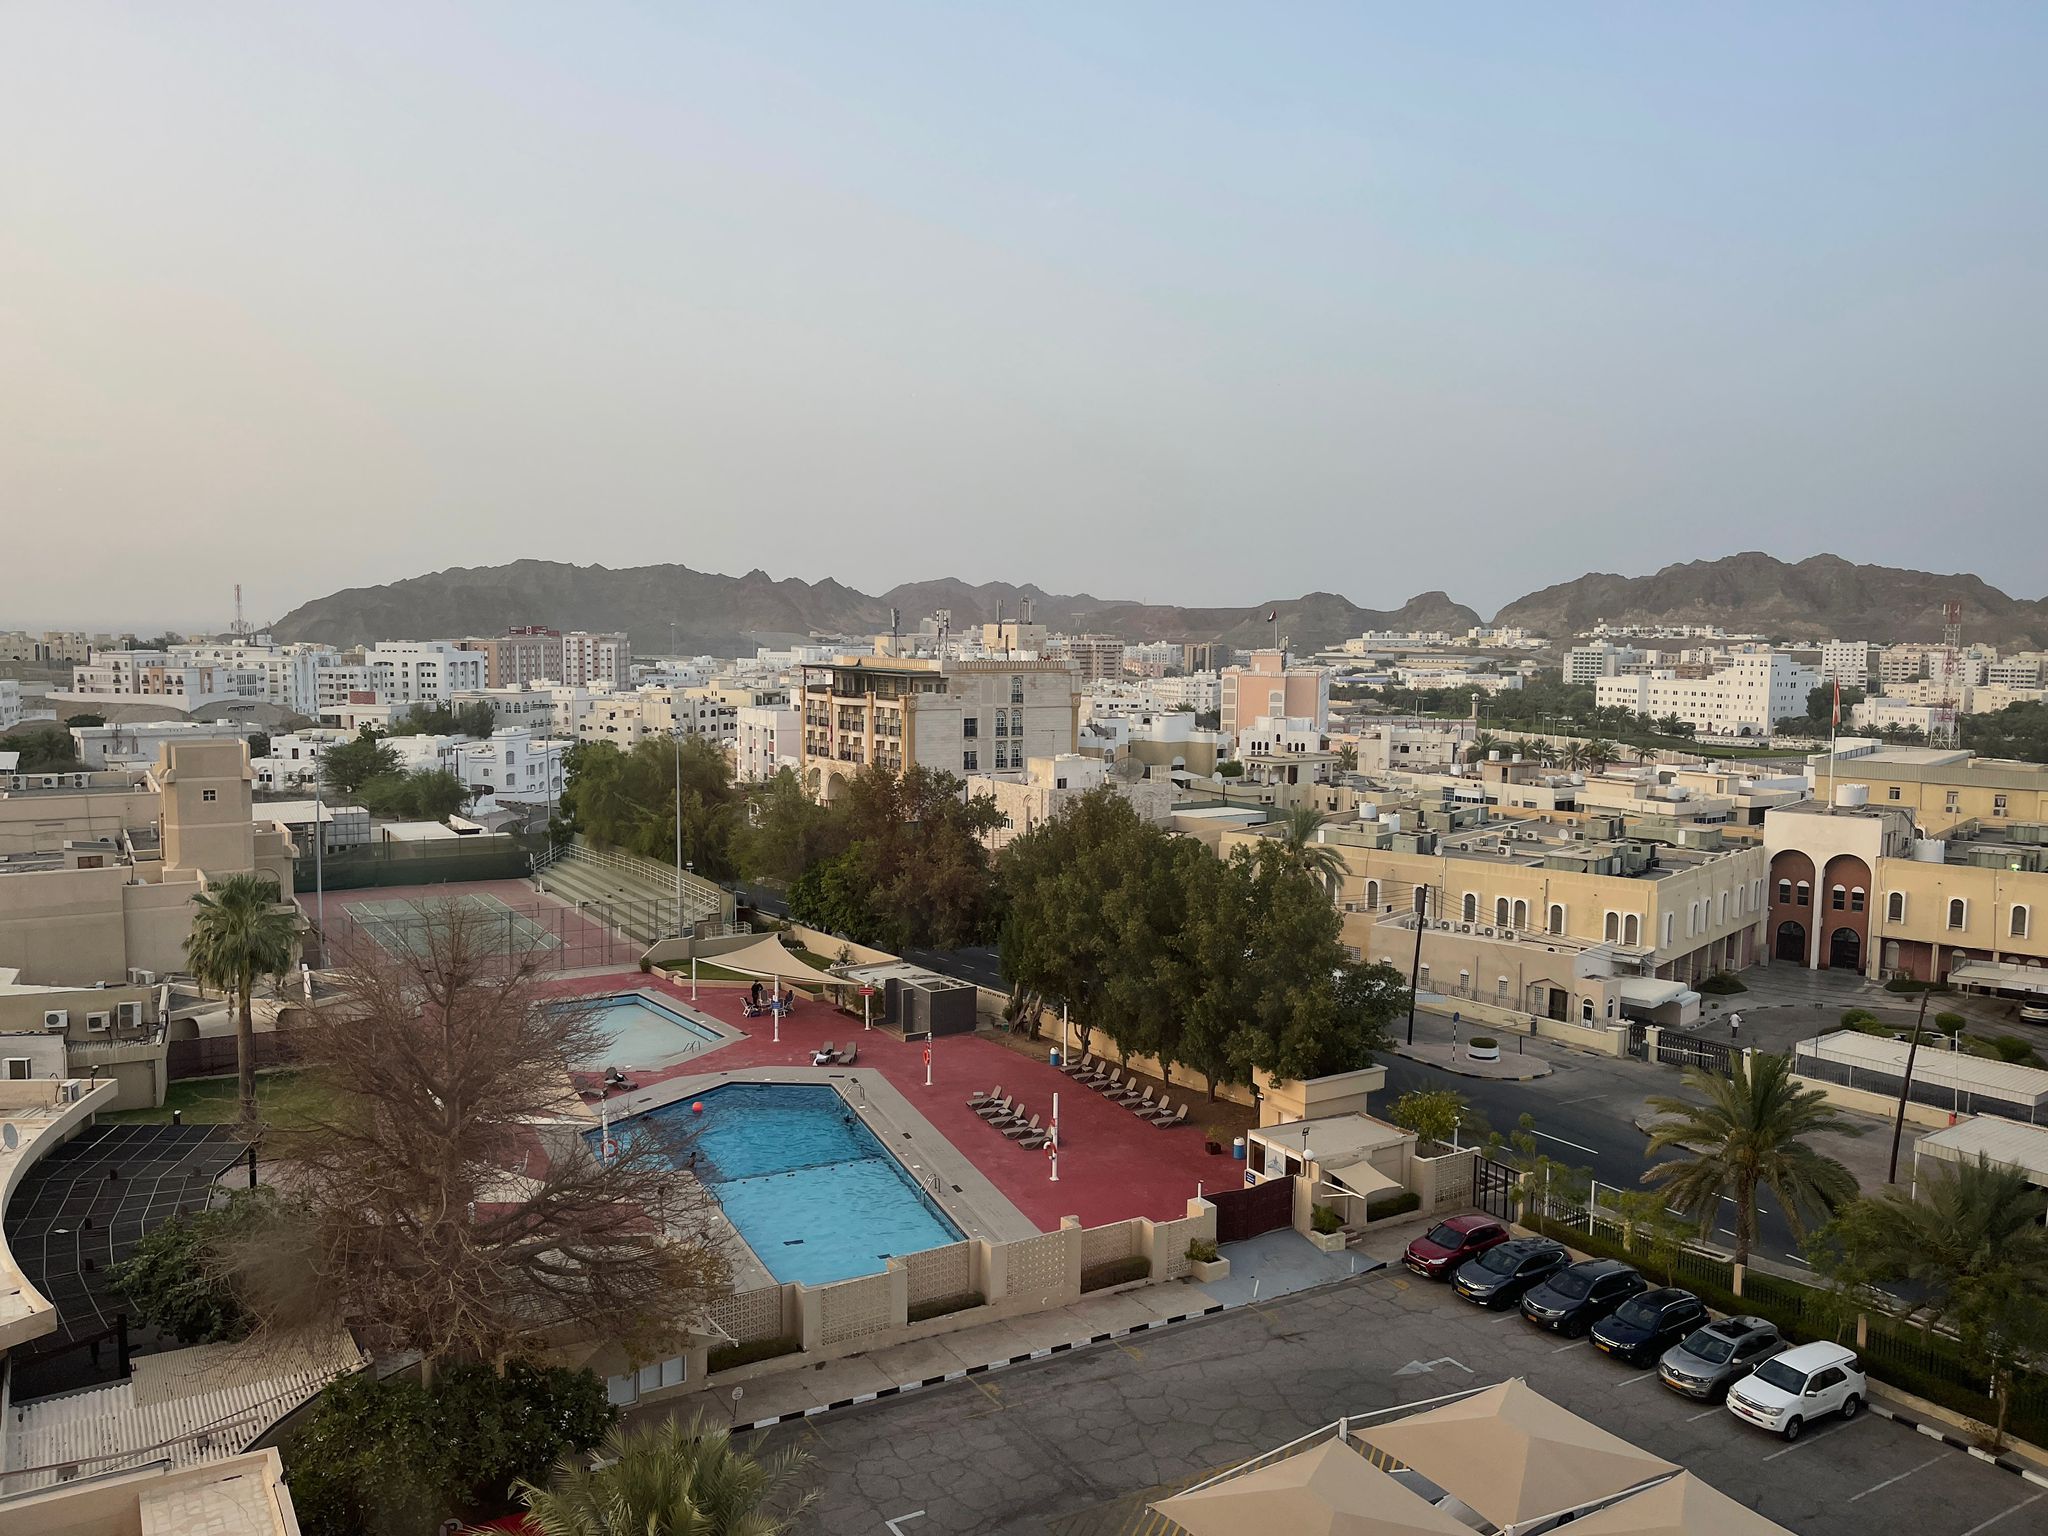 Al Falaj Hotel – Where You Should Stay When in Muscat, Oman